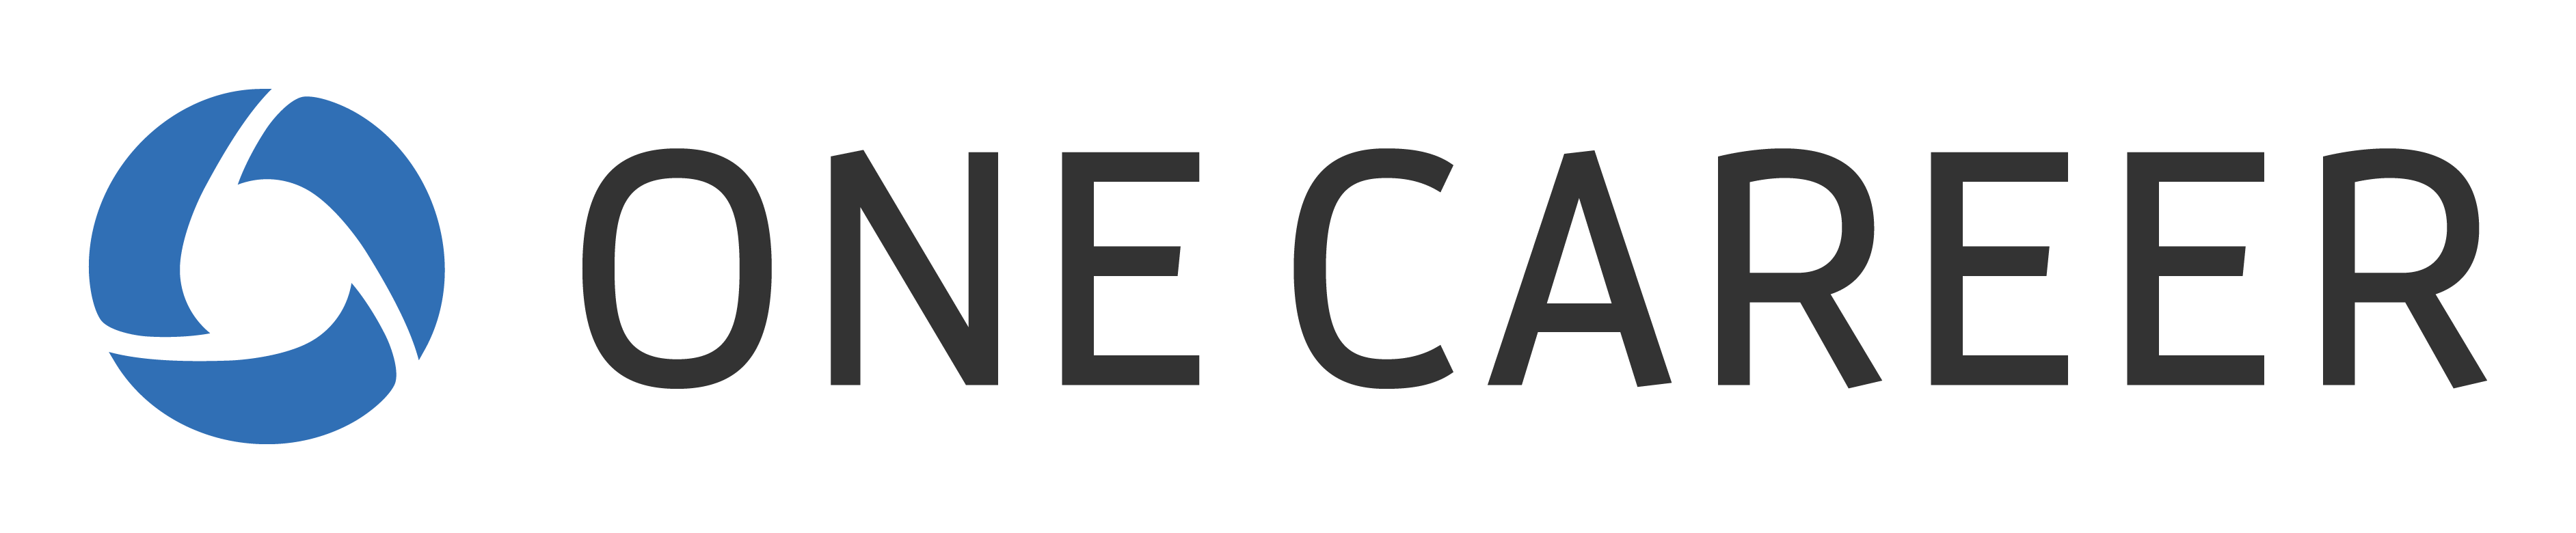 One Career logo